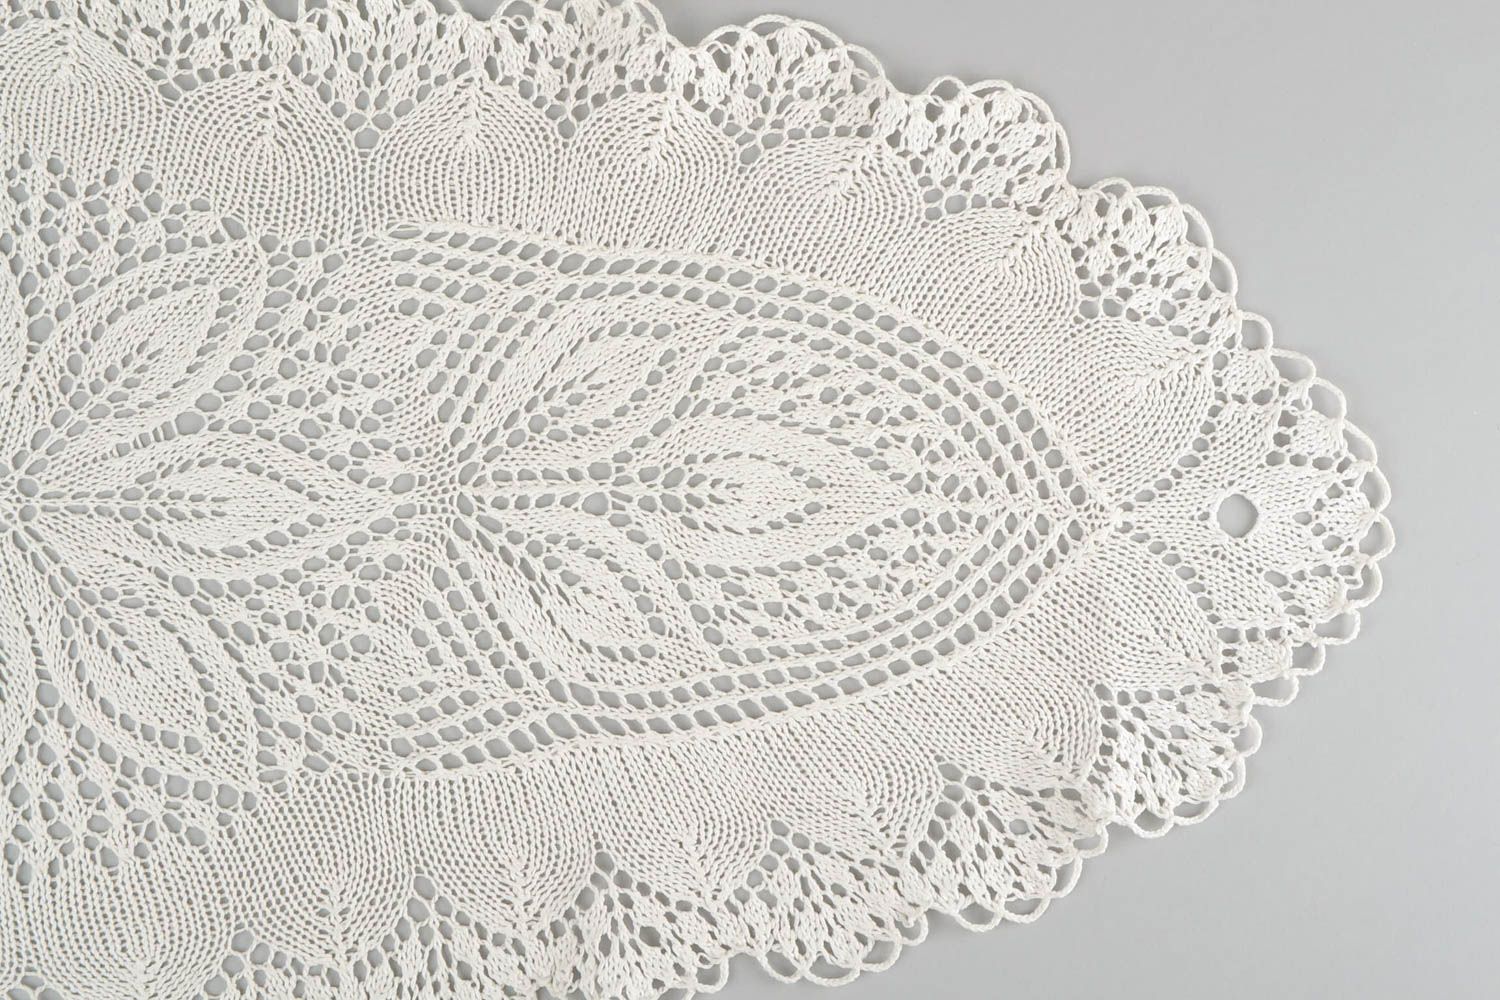 Handmade knitted napkin crocheted napkin for table home textiles interior ideas photo 4